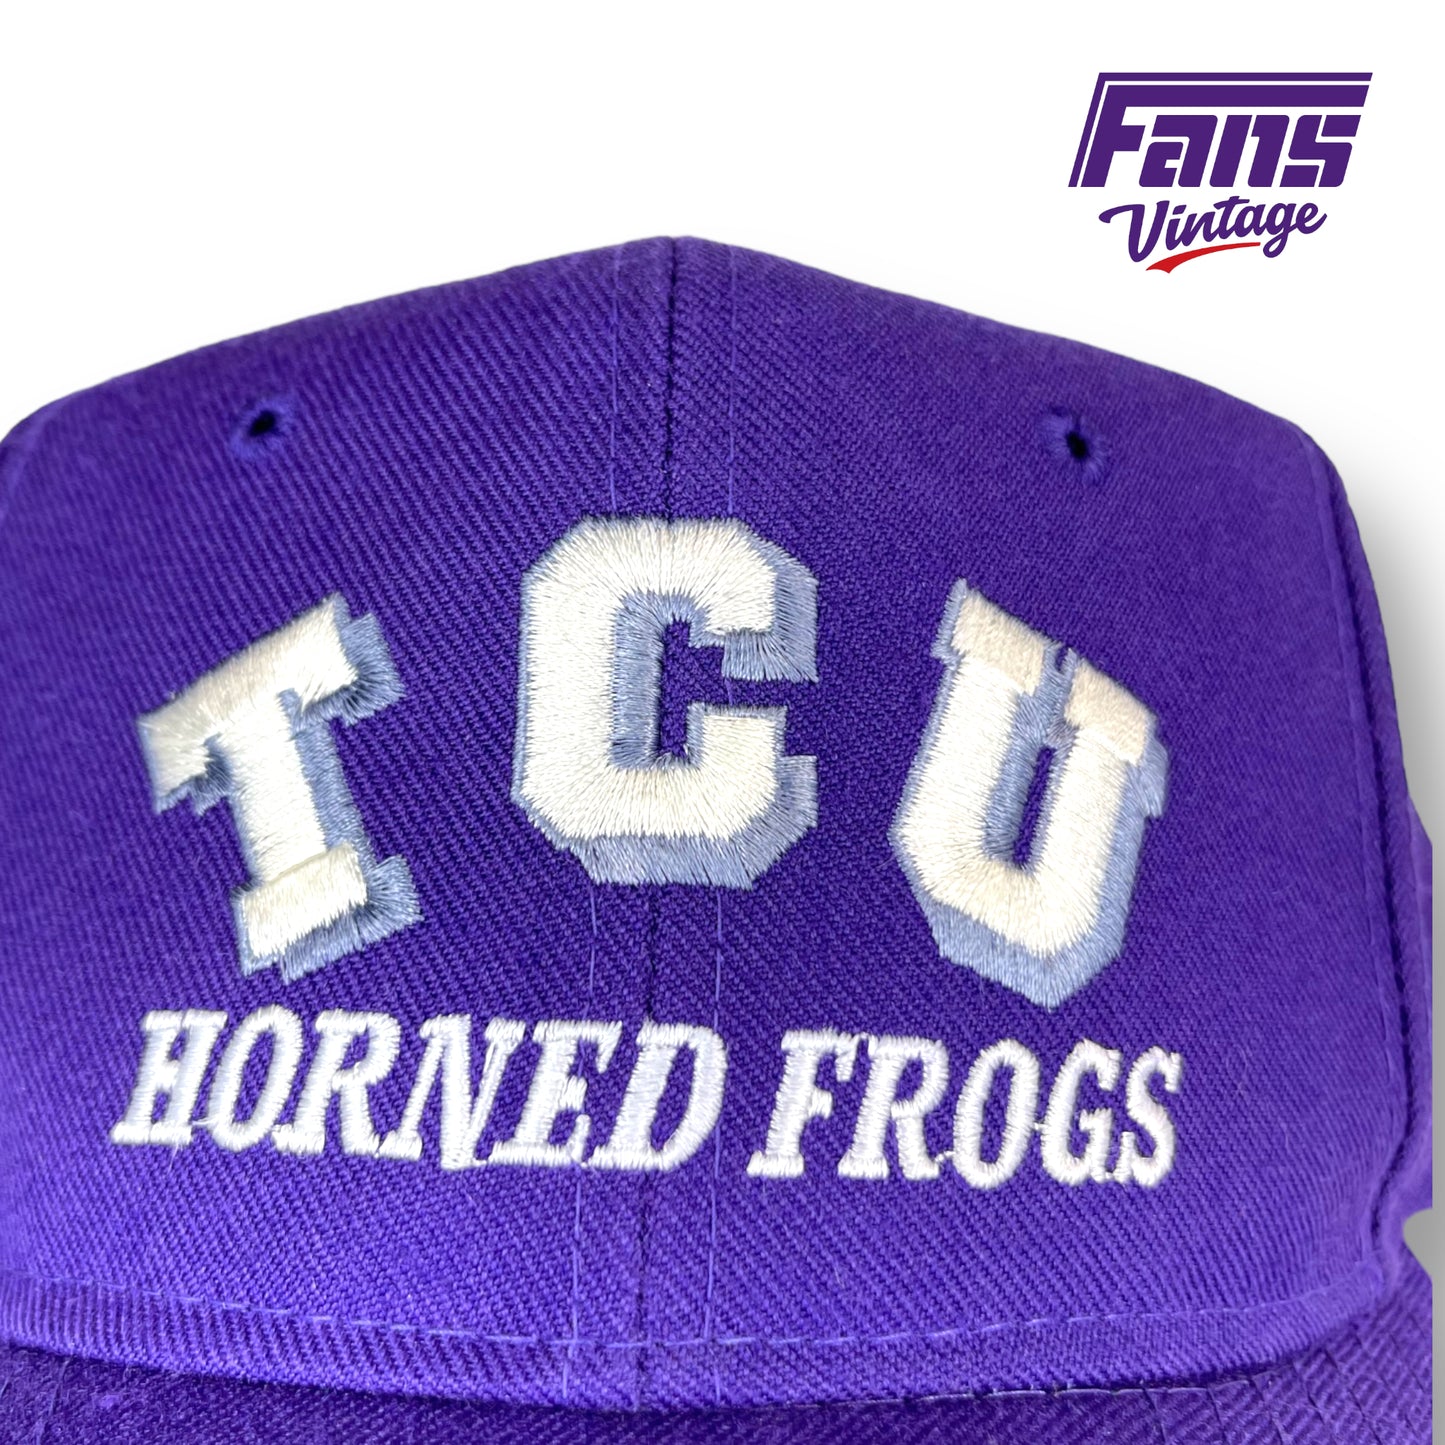 90's vintage TCU snap back hat